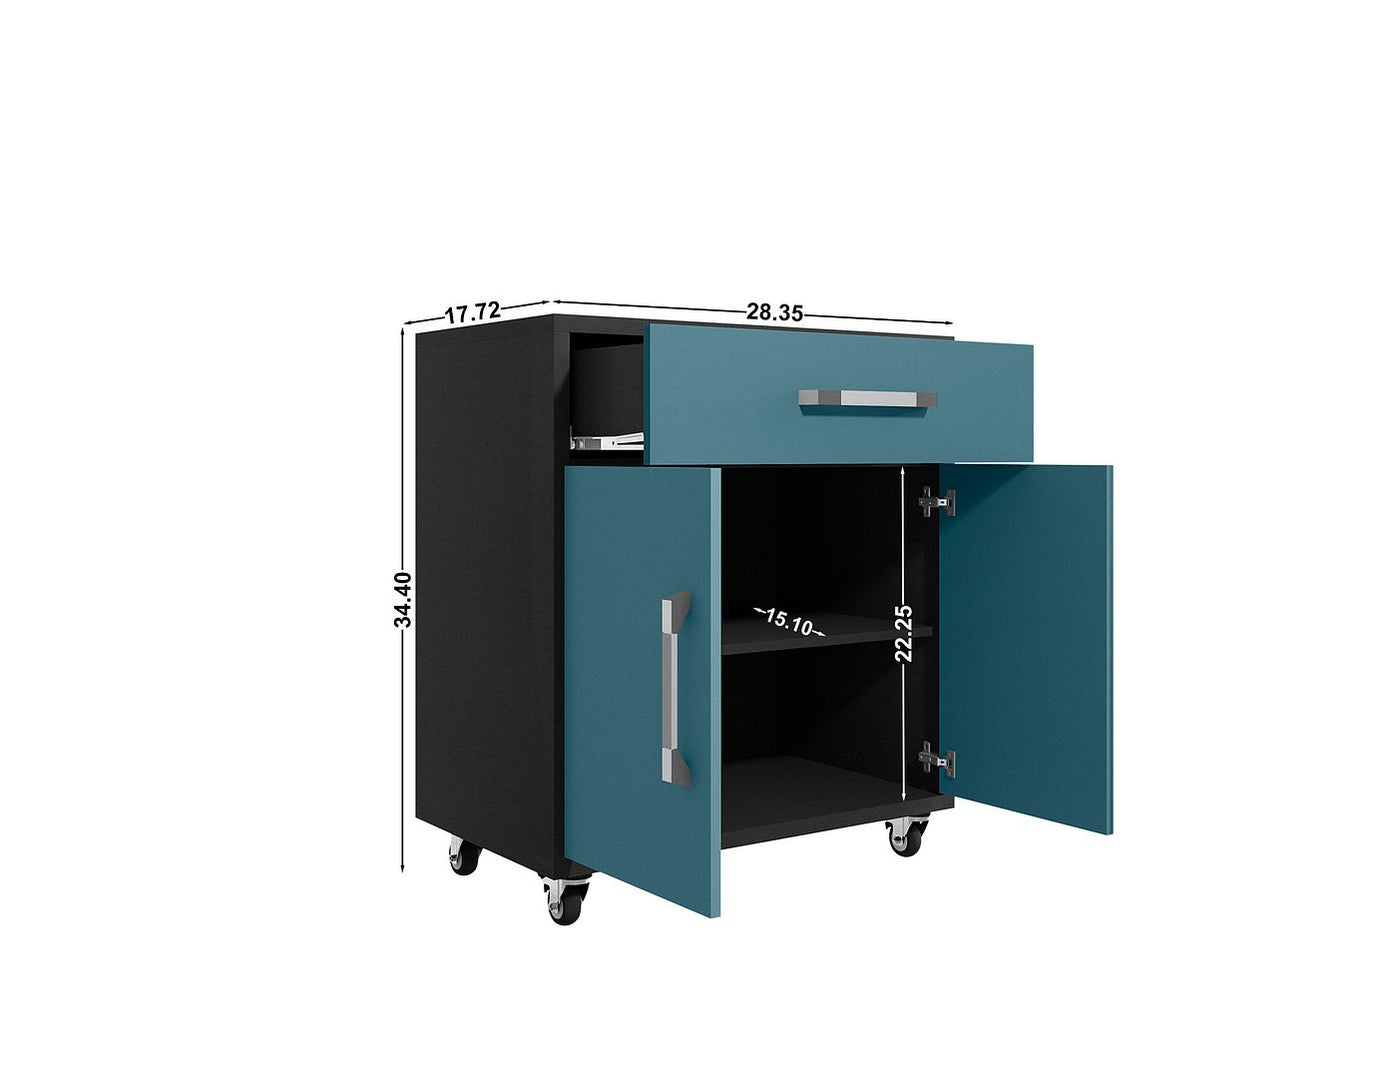 Lunde Mobile Garage Storage Cabinet - Blue Gloss